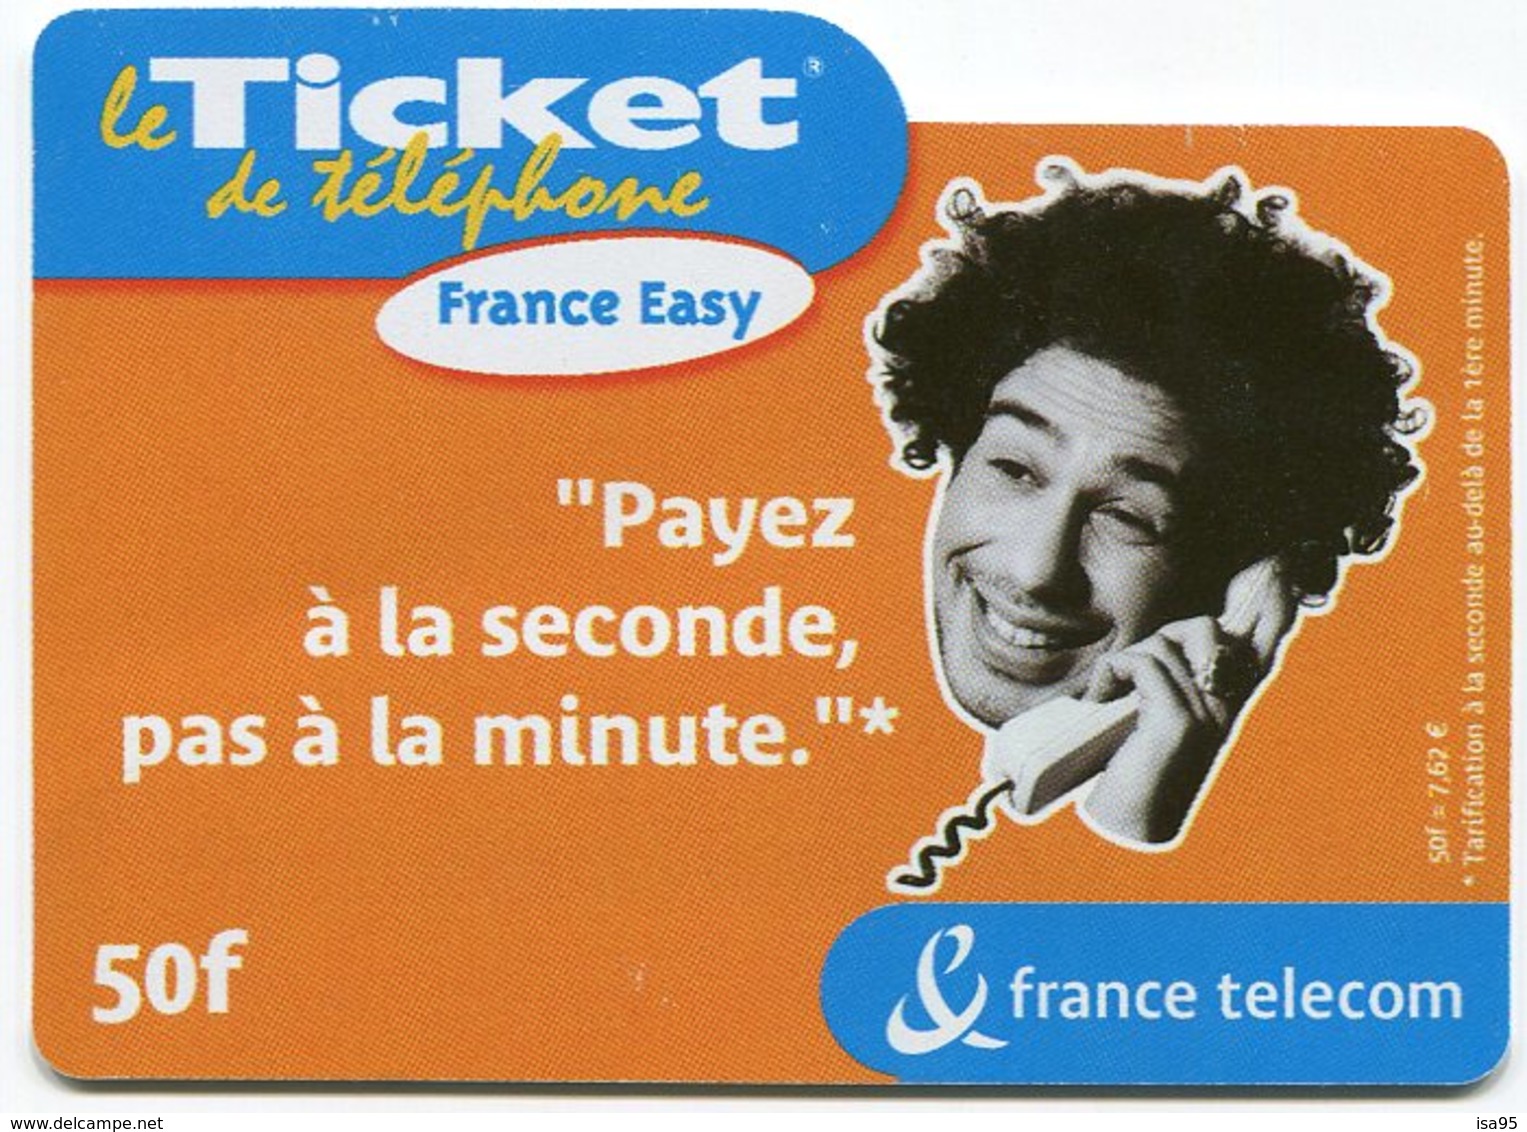 TELECARTE-LE TICKET DE TELEPHONE FRANCE EASY-2003-50F - Billetes FT